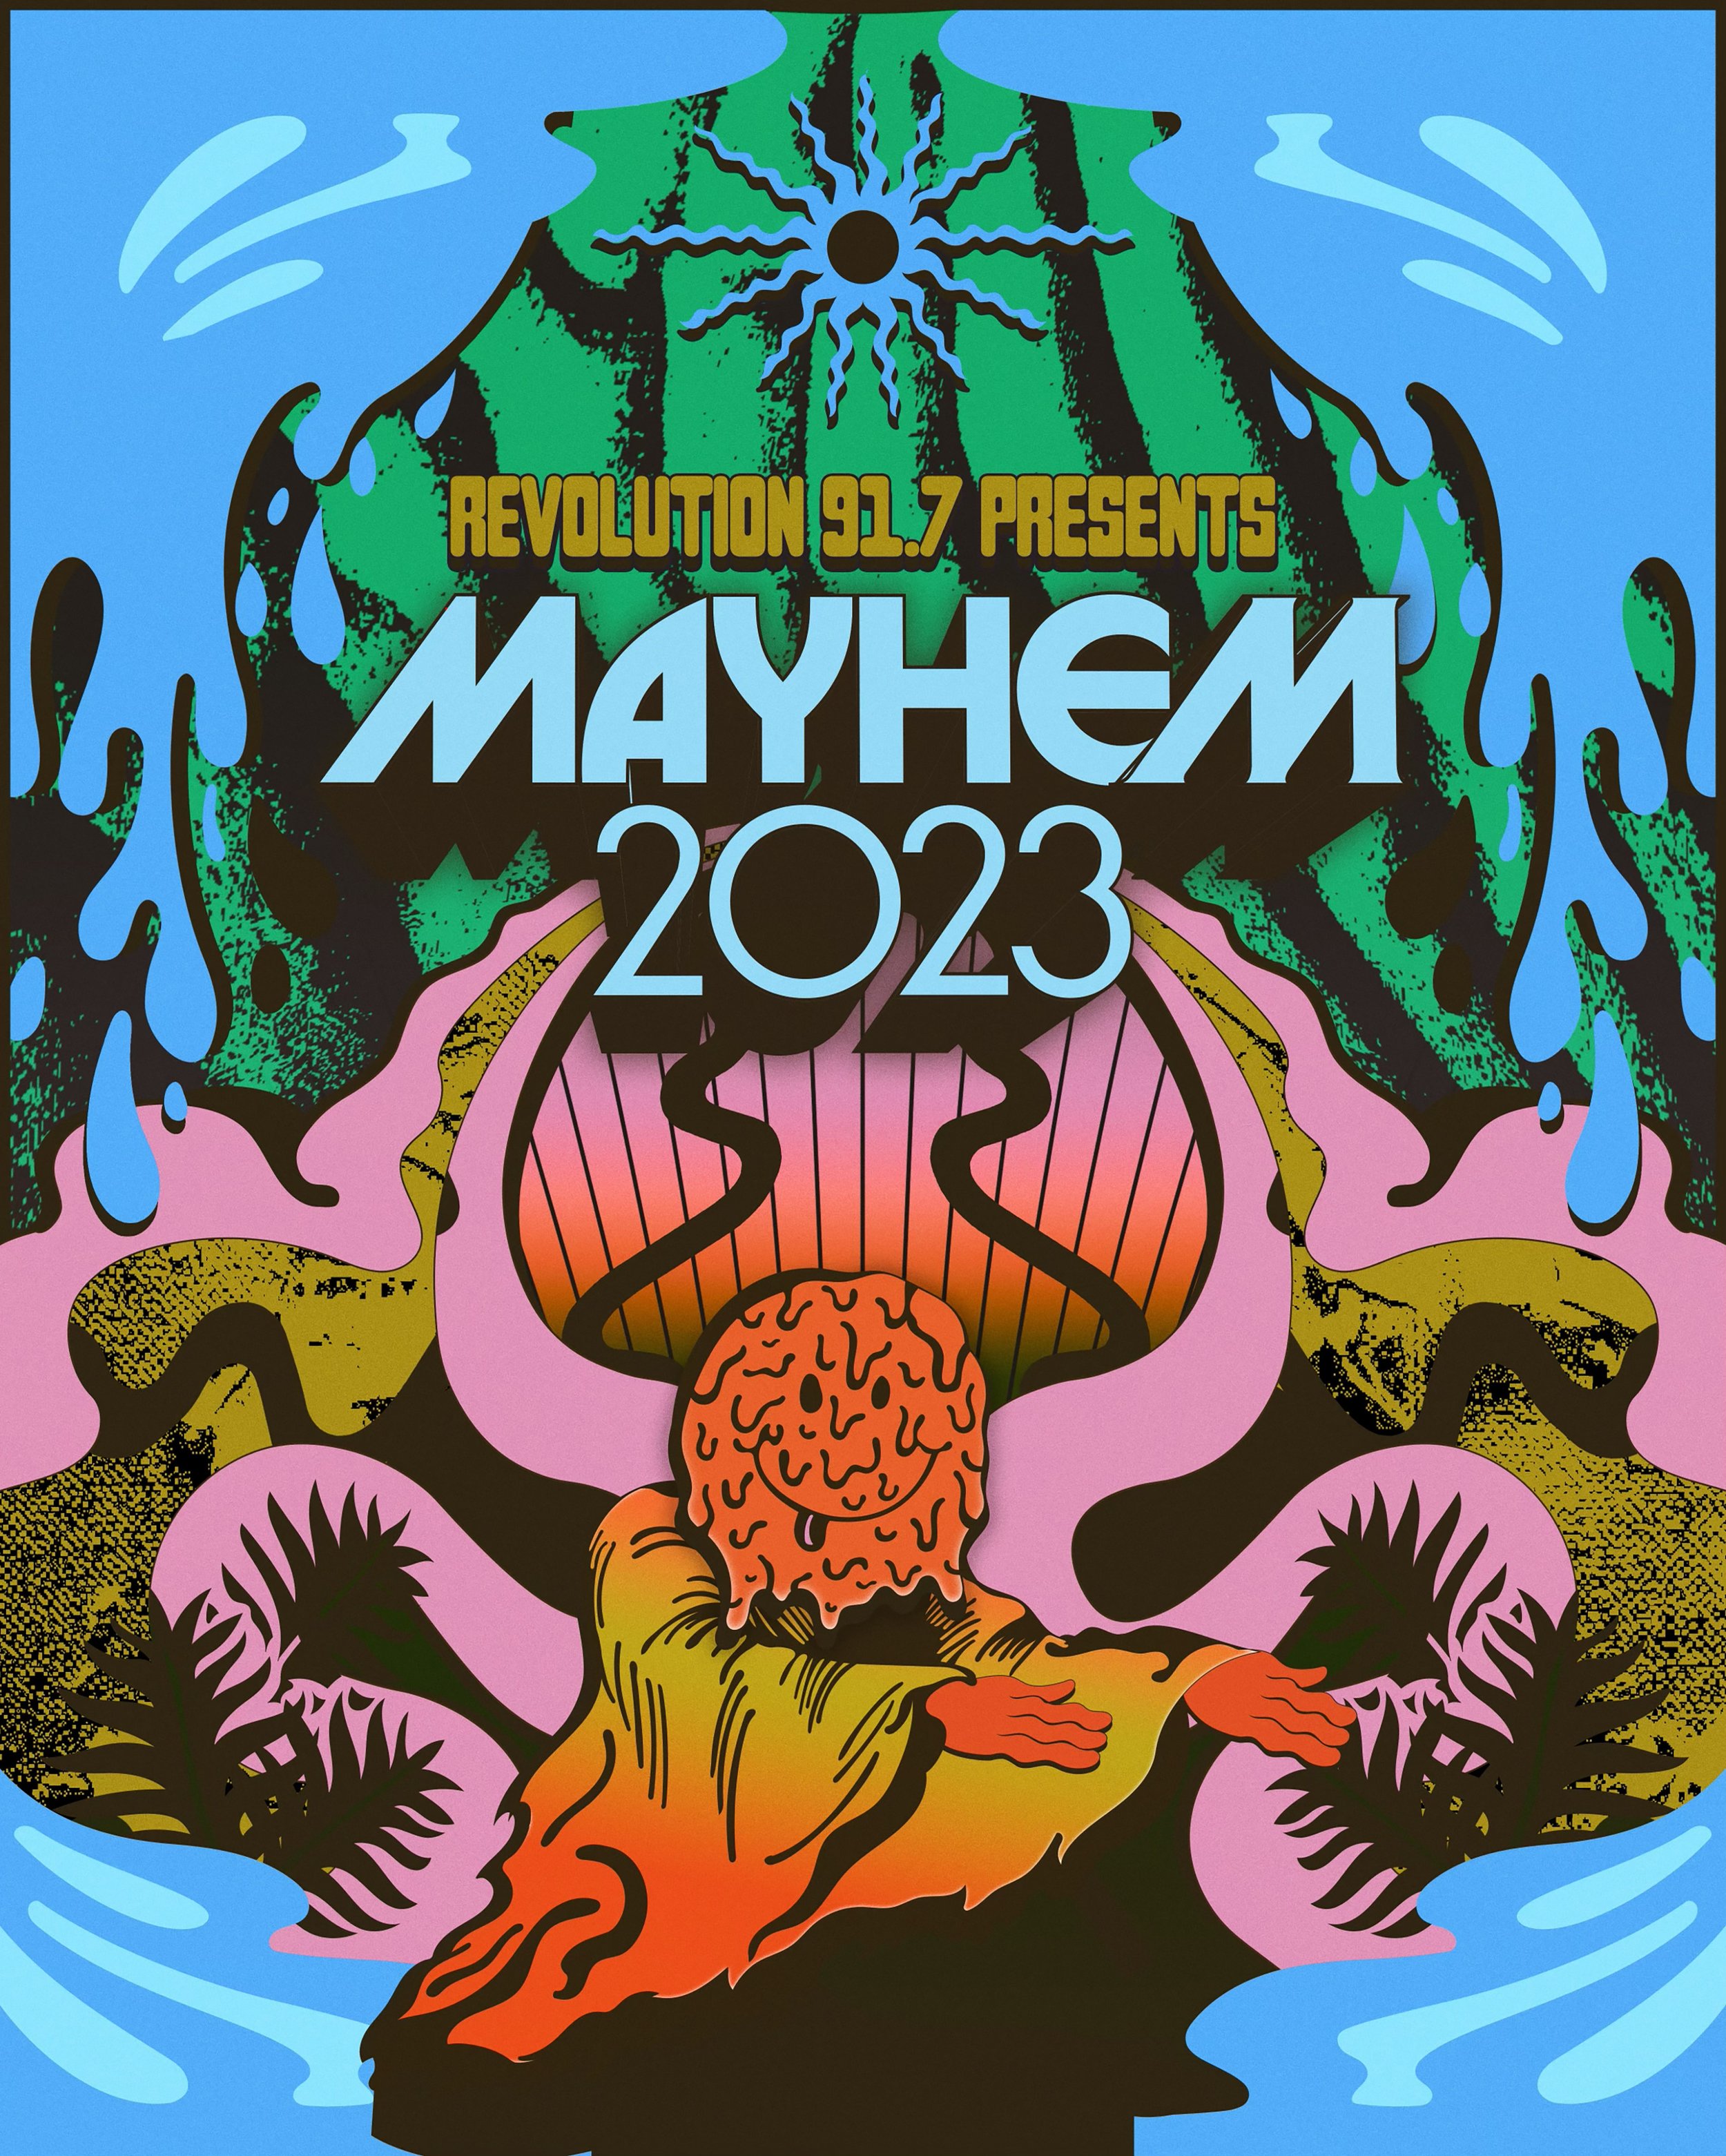 Revolution 91.7 announces mayhem festival 2023 — Mallett